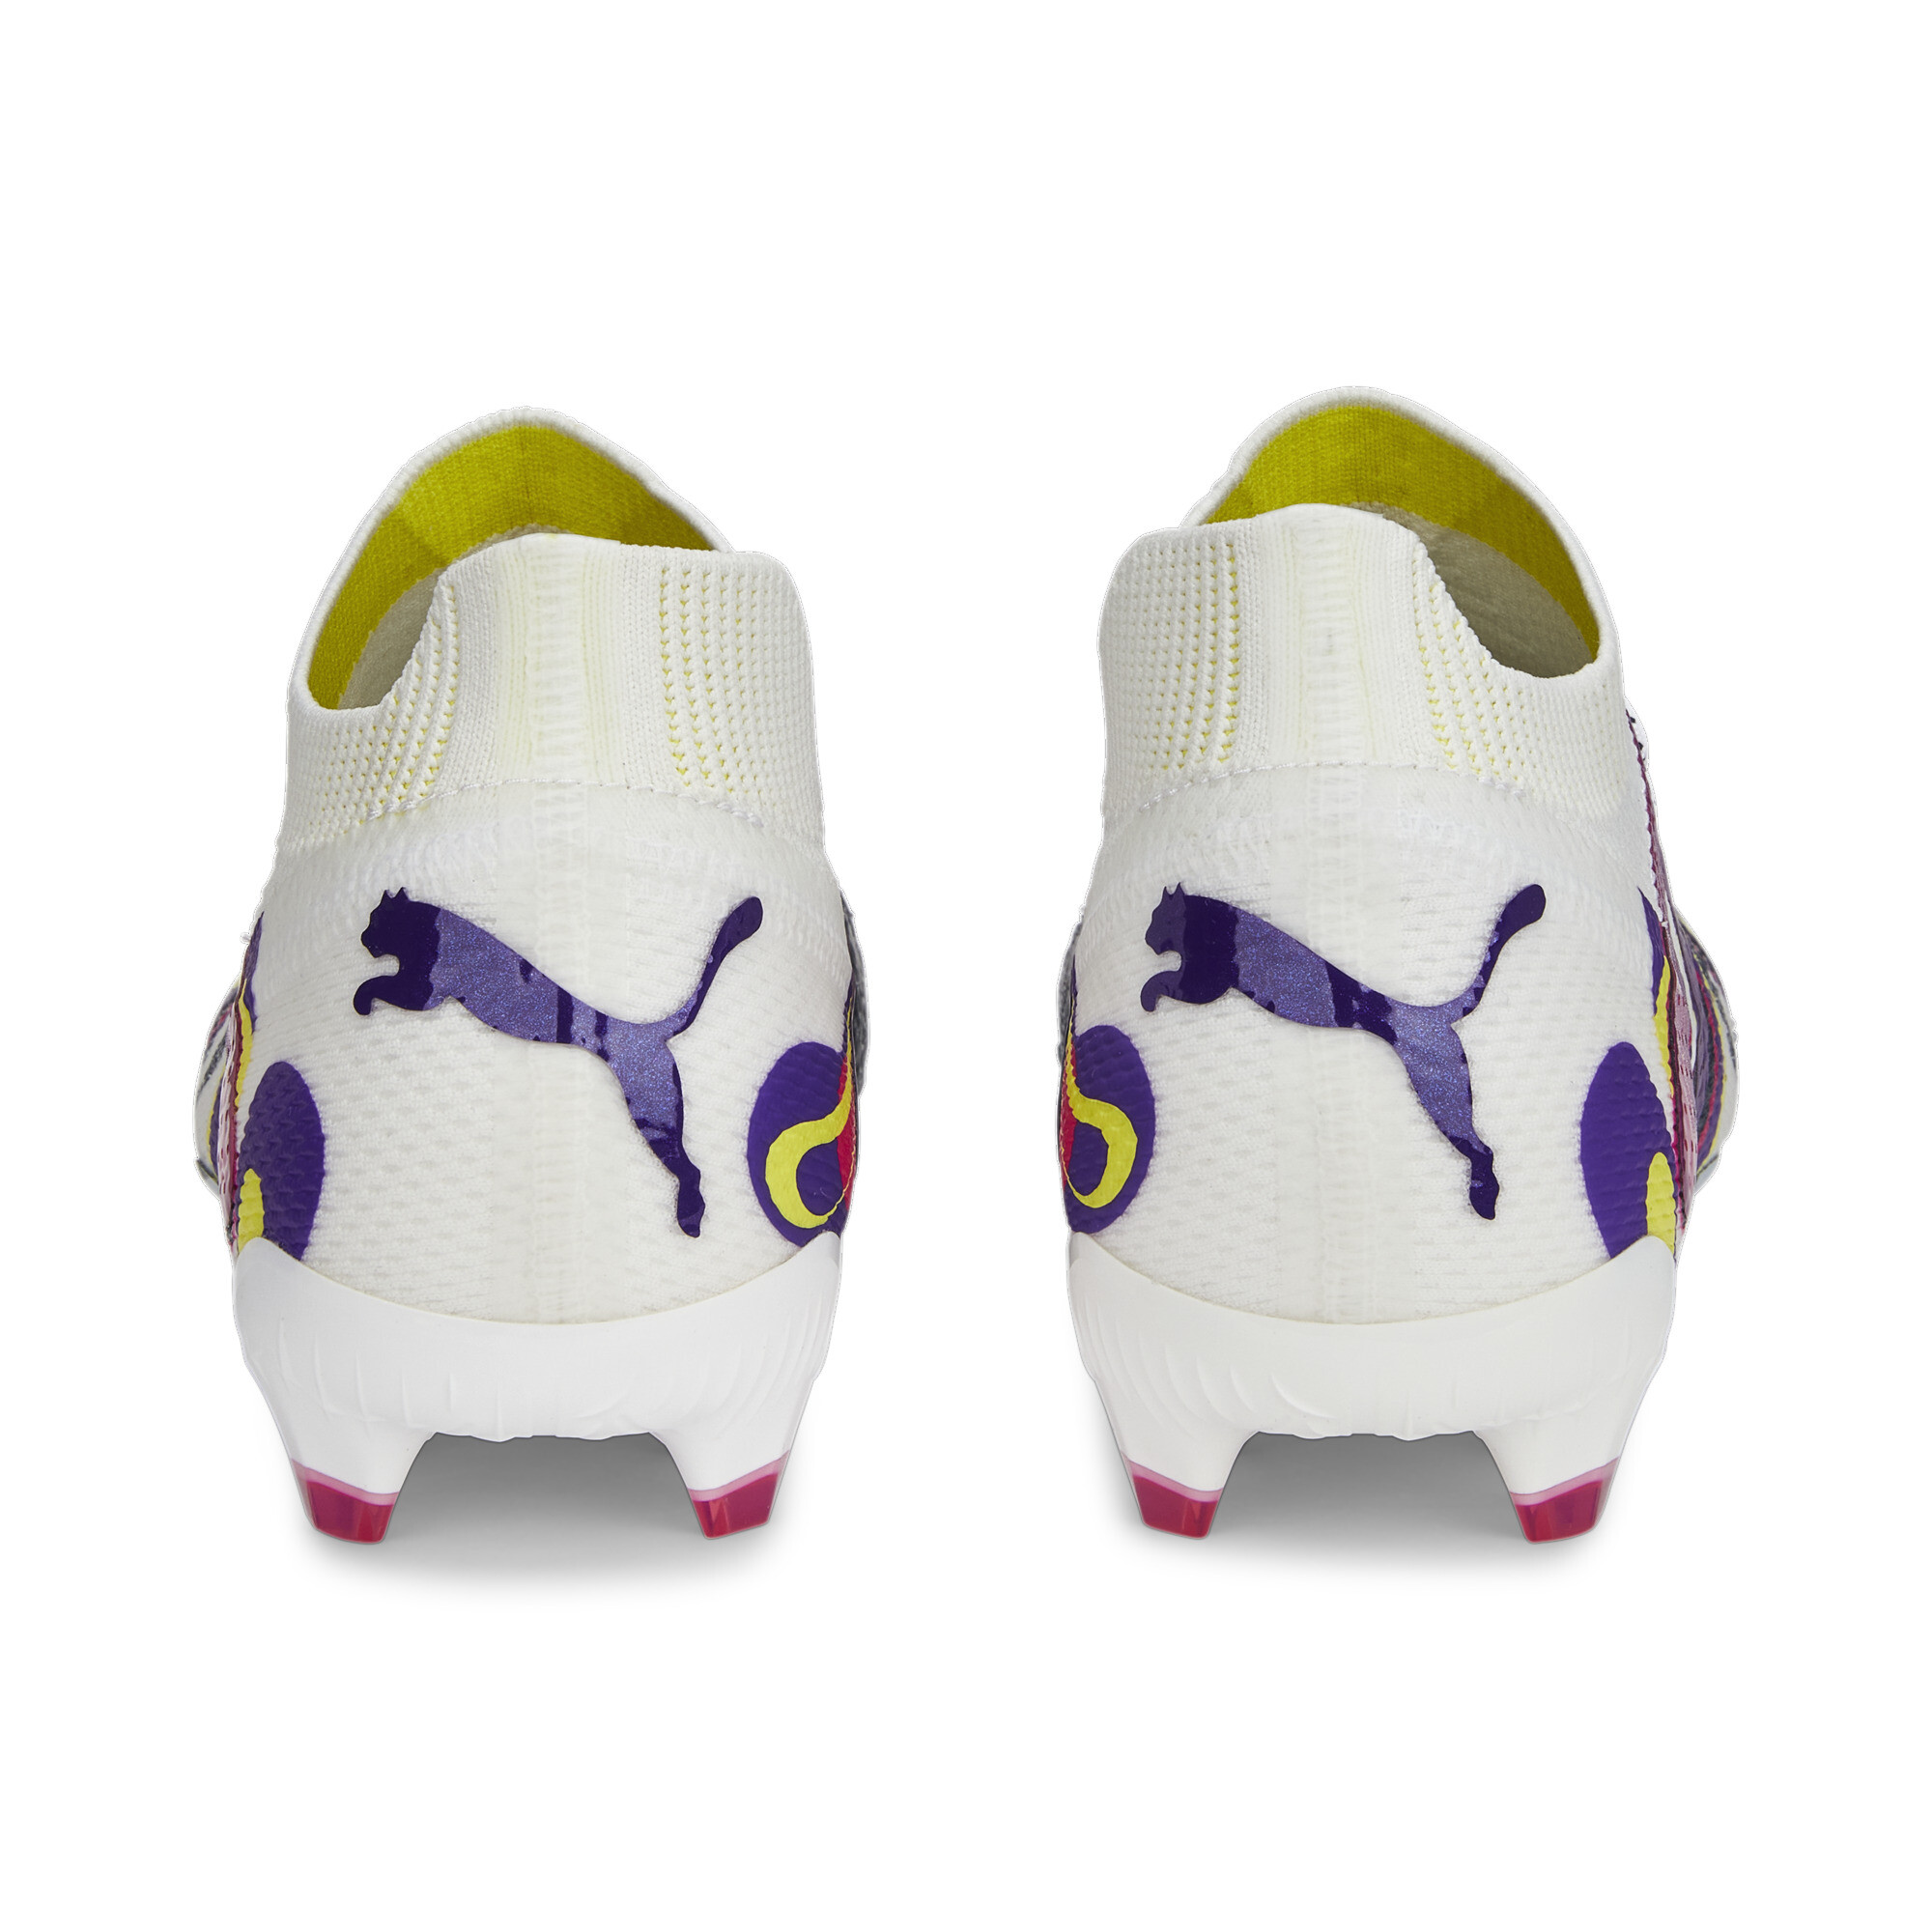 Men's PUMA FUTURE ULTIMATE CREATIVITY FG/AG Football Boots In White, Size EU 47